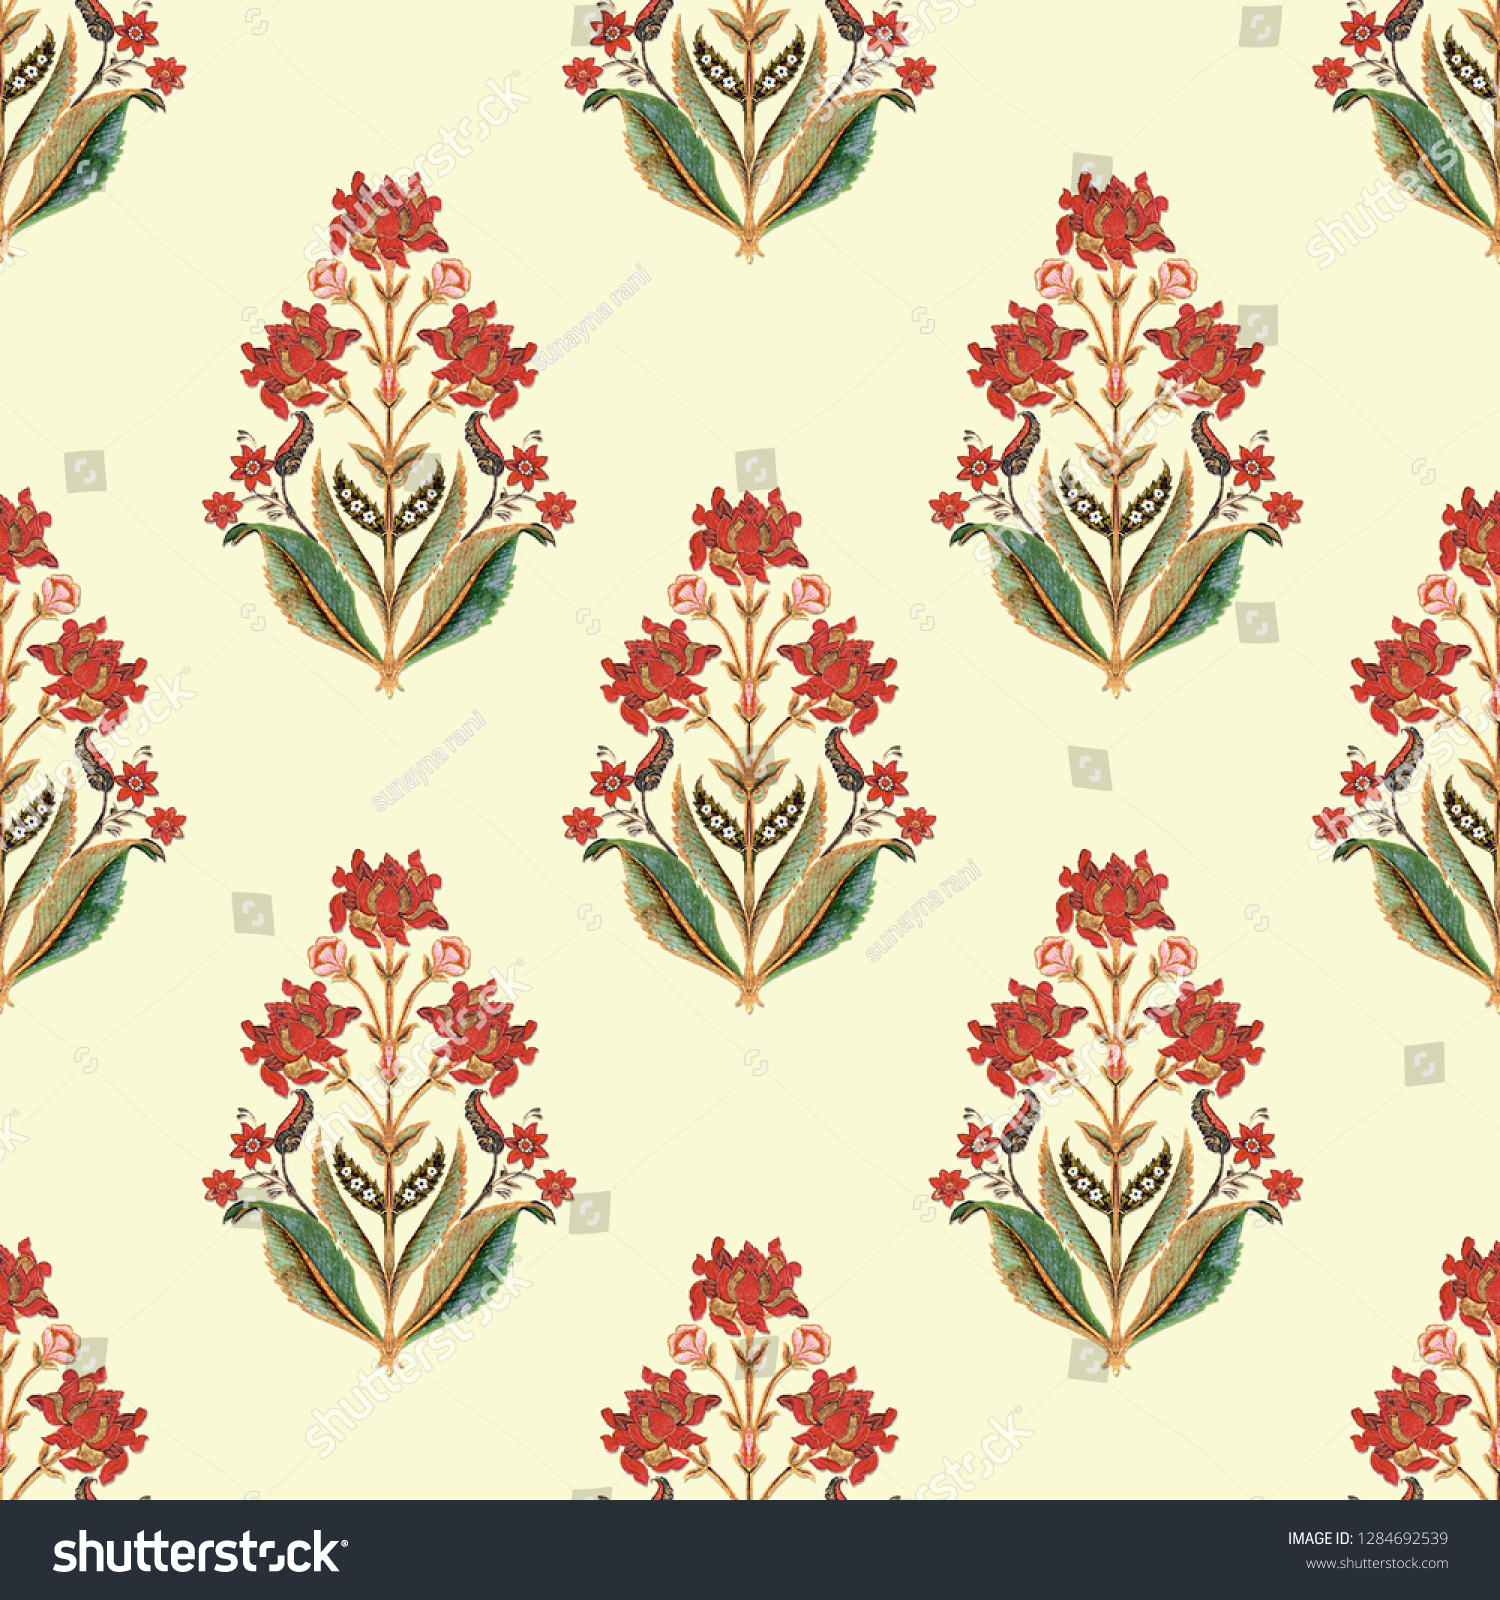 Red Buta Cream Color Stock Illustration 1284692539 | Shutterstock